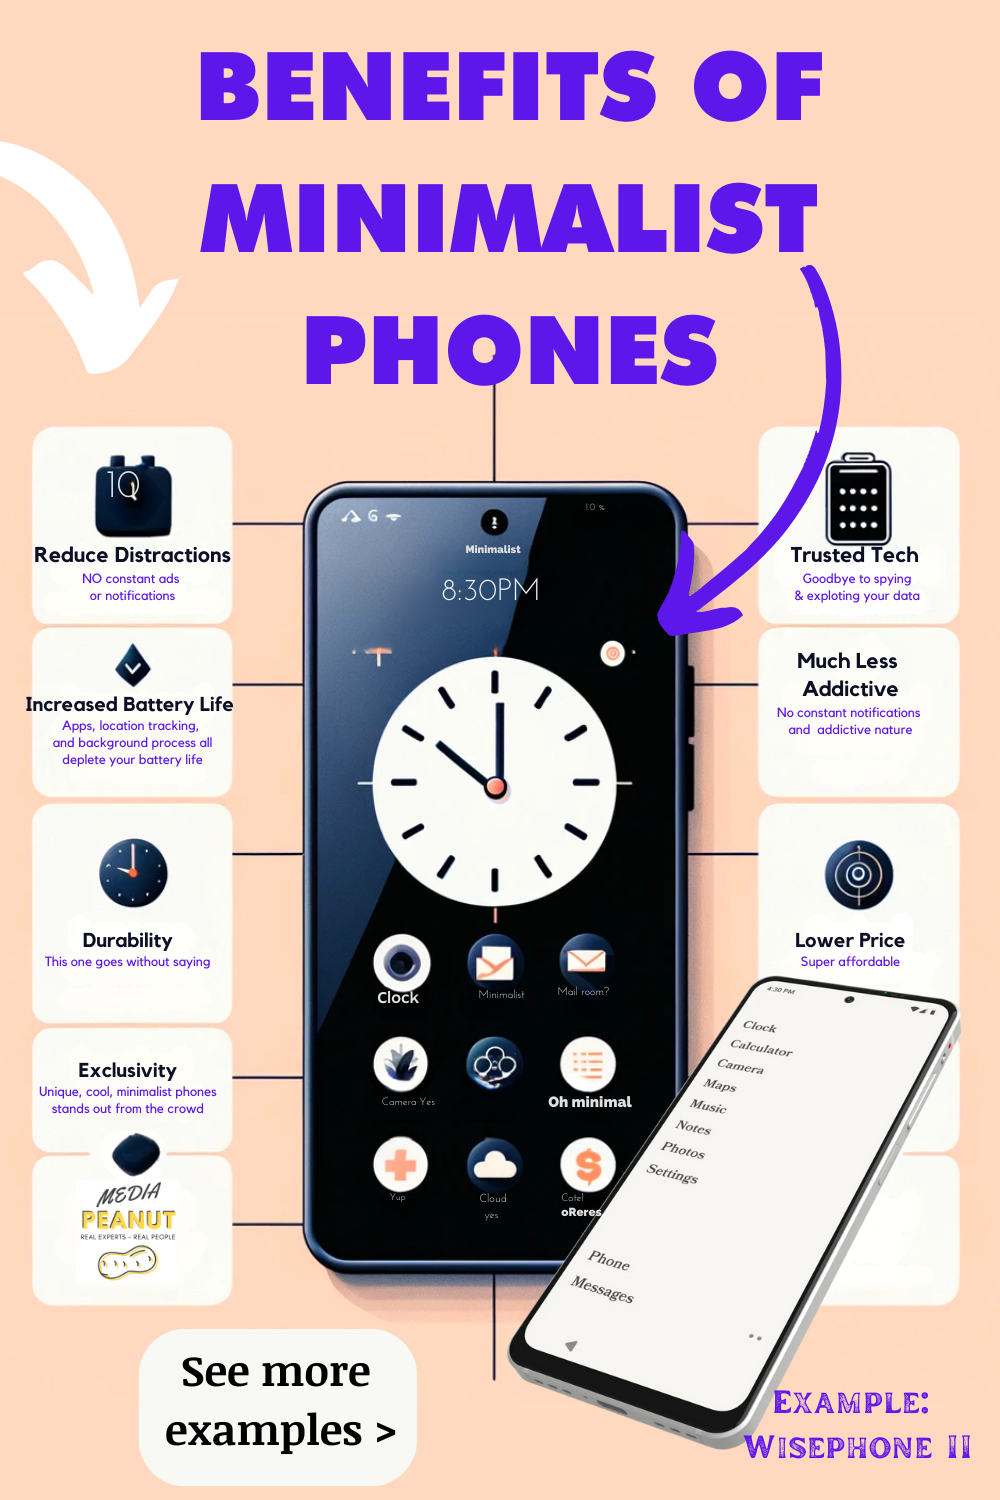 Benefits of minimalist phones infograph by mediapeanut